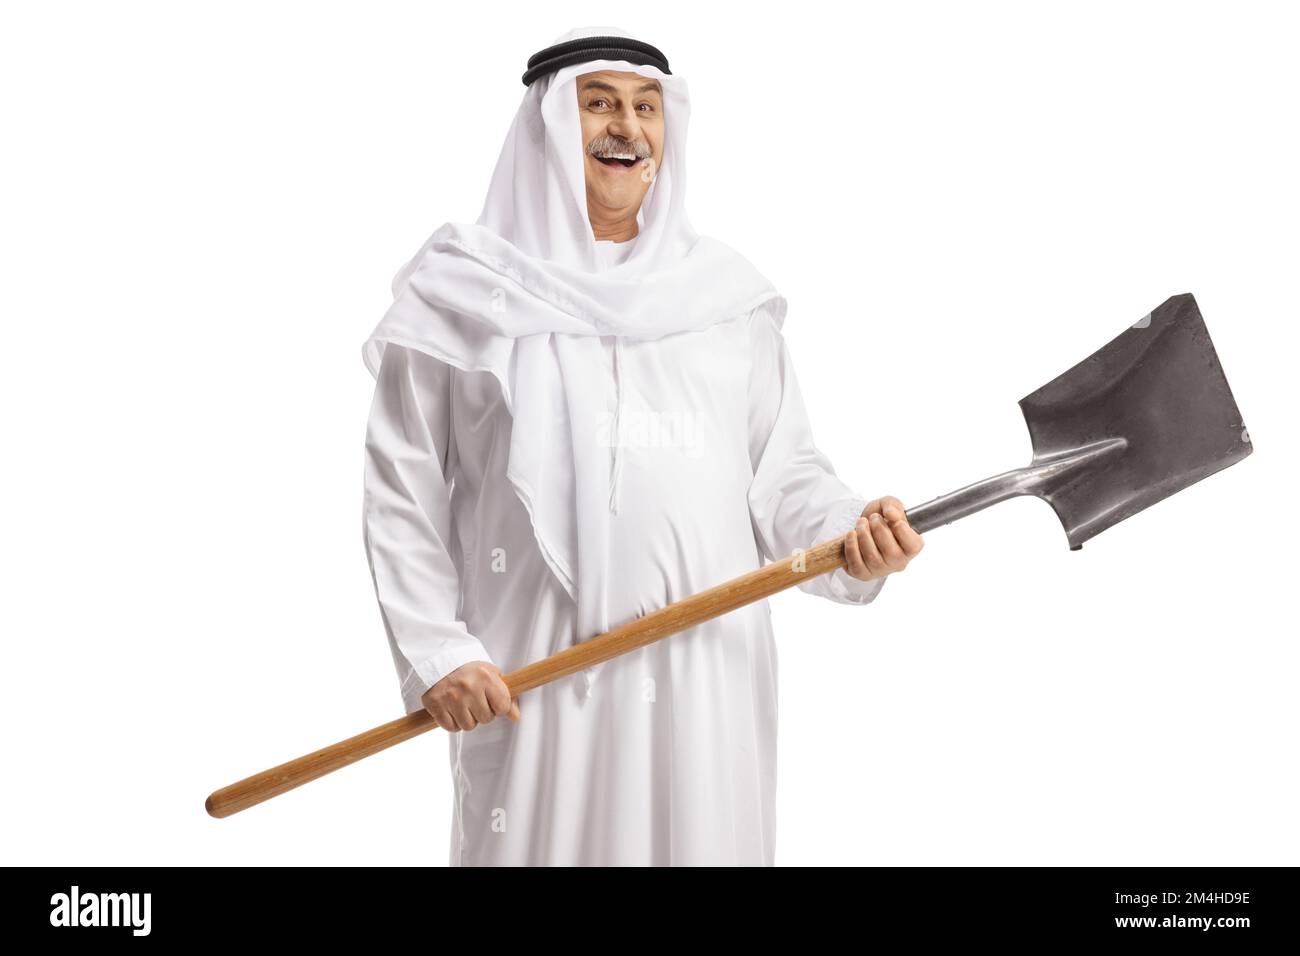 Mature arab man smiling and holding a shovel isolated on white background Stock Photo